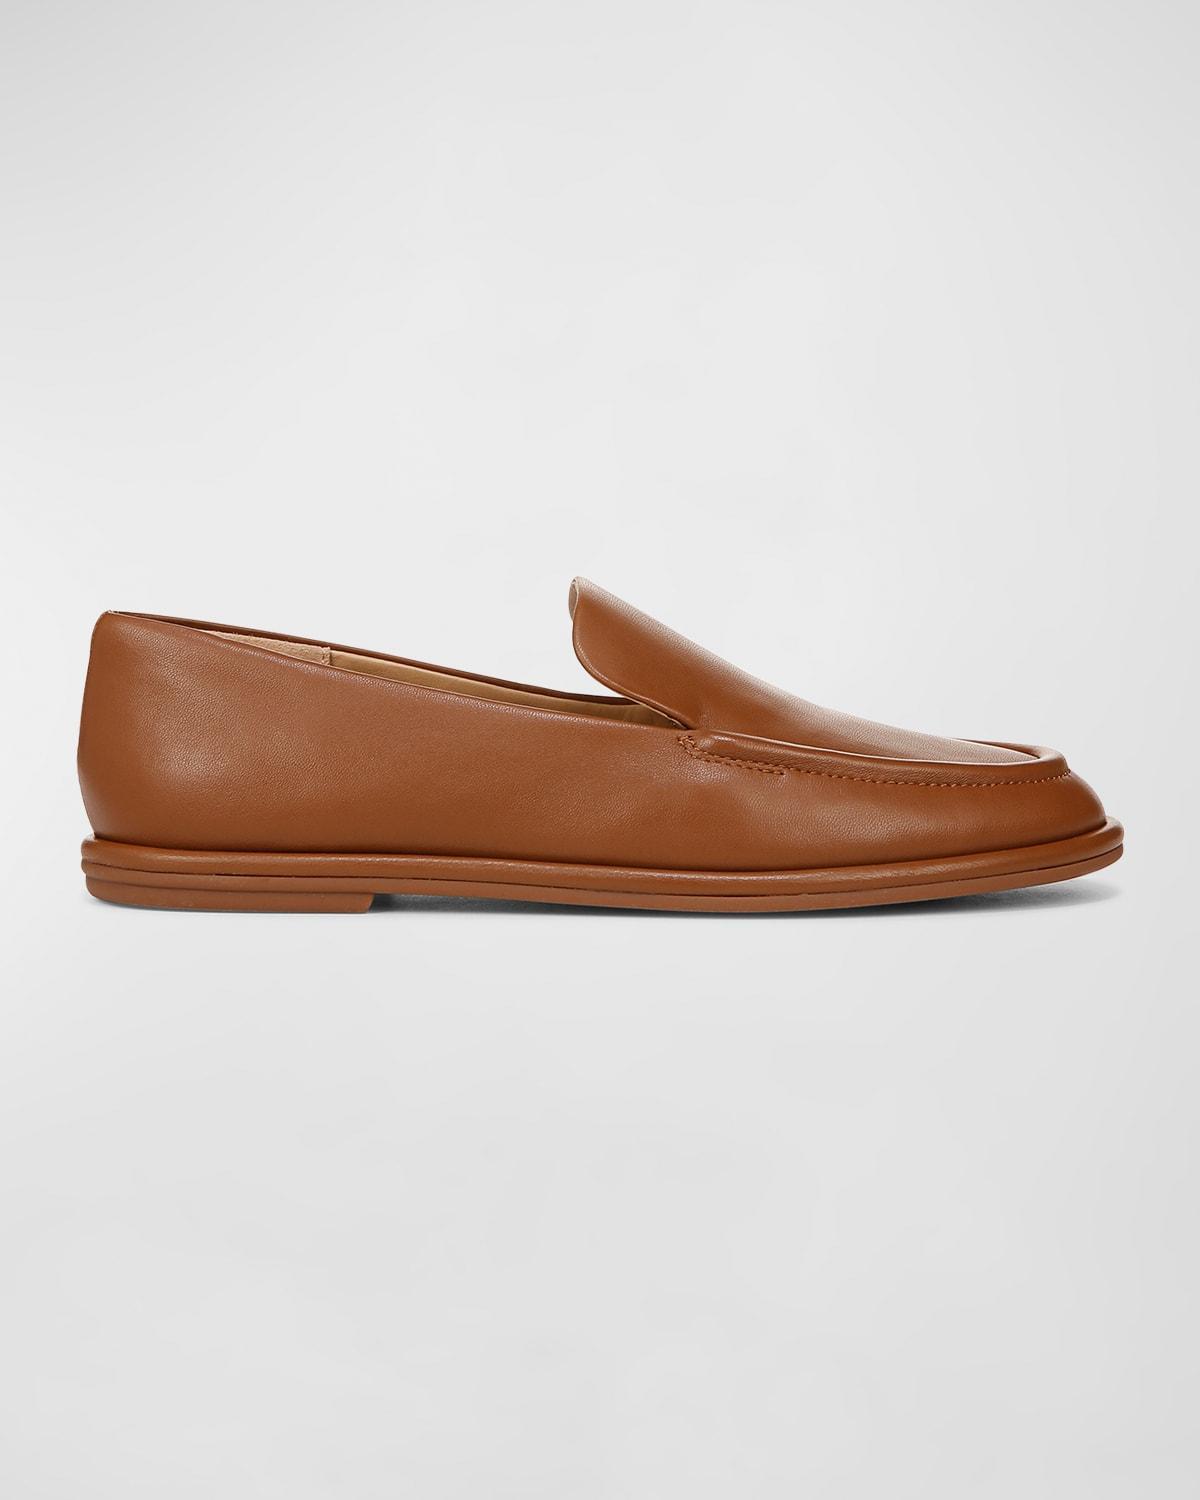 Sloan Lambskin Slip-On Loafers Product Image